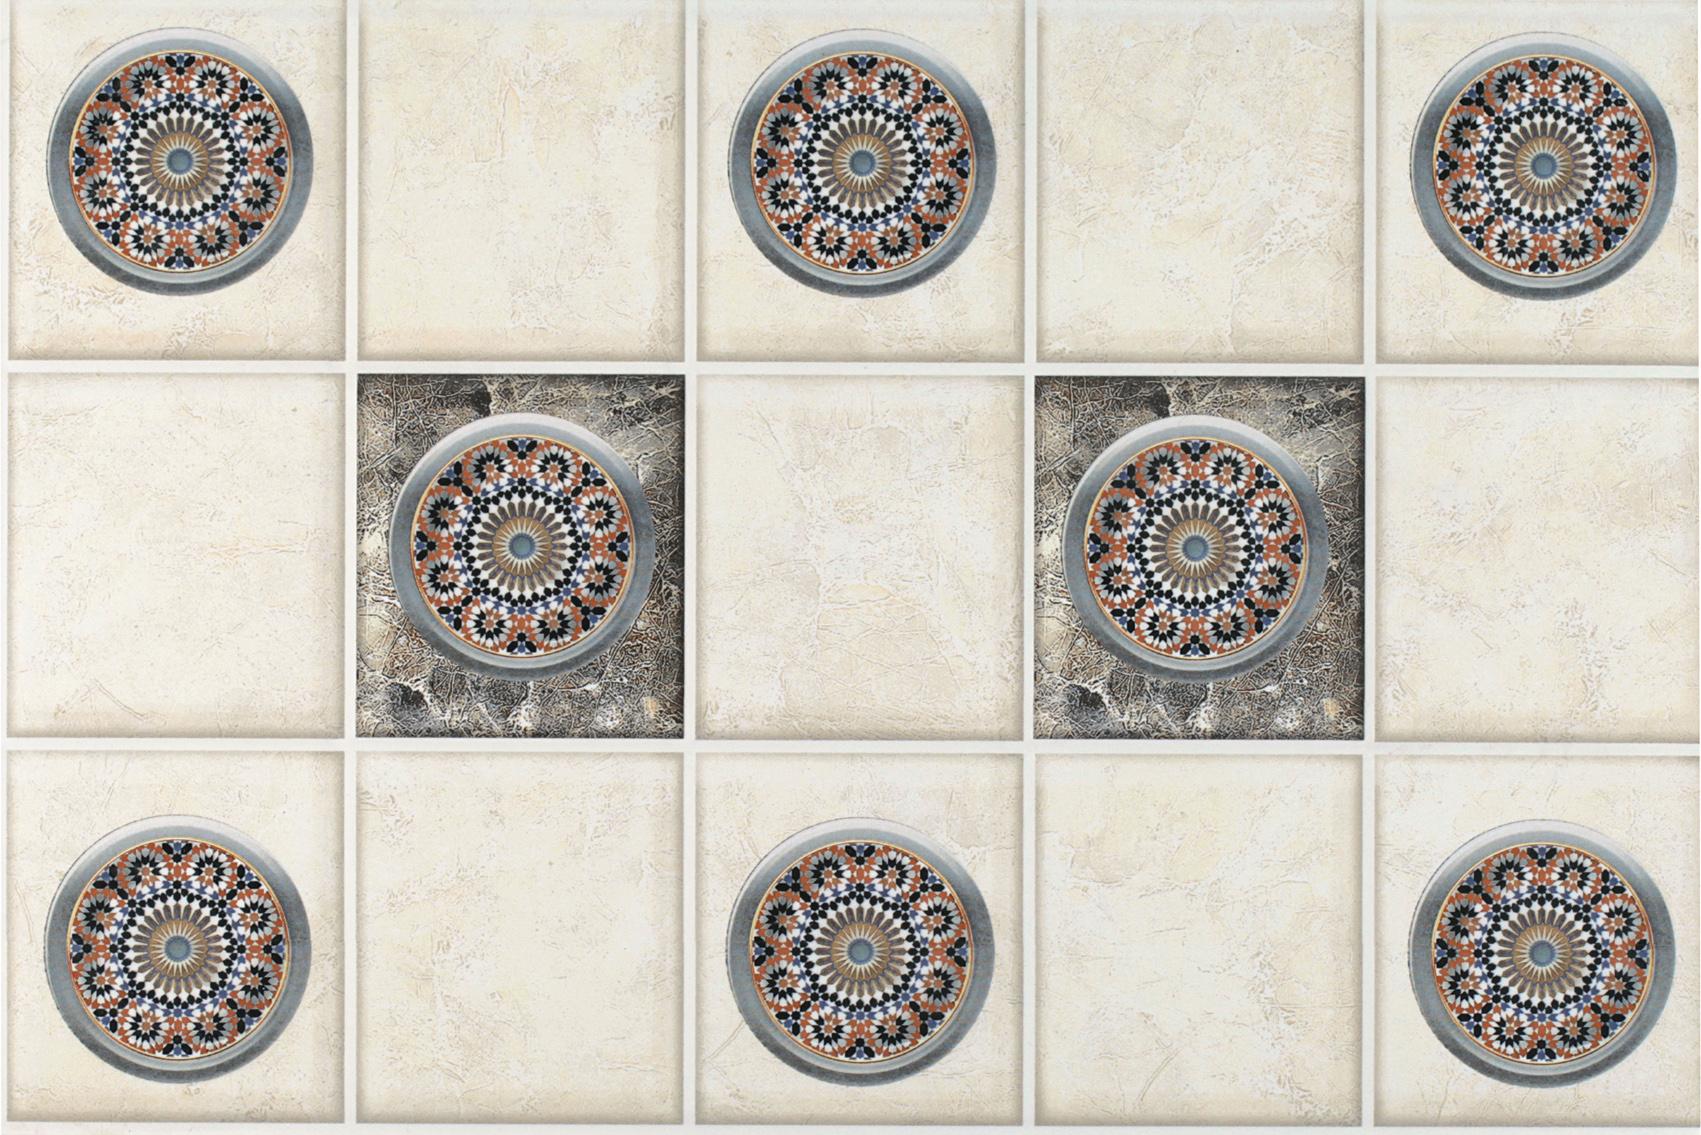 Glass Mosaic Tiles for Bathroom Tiles, Kitchen Tiles, Accent Tiles